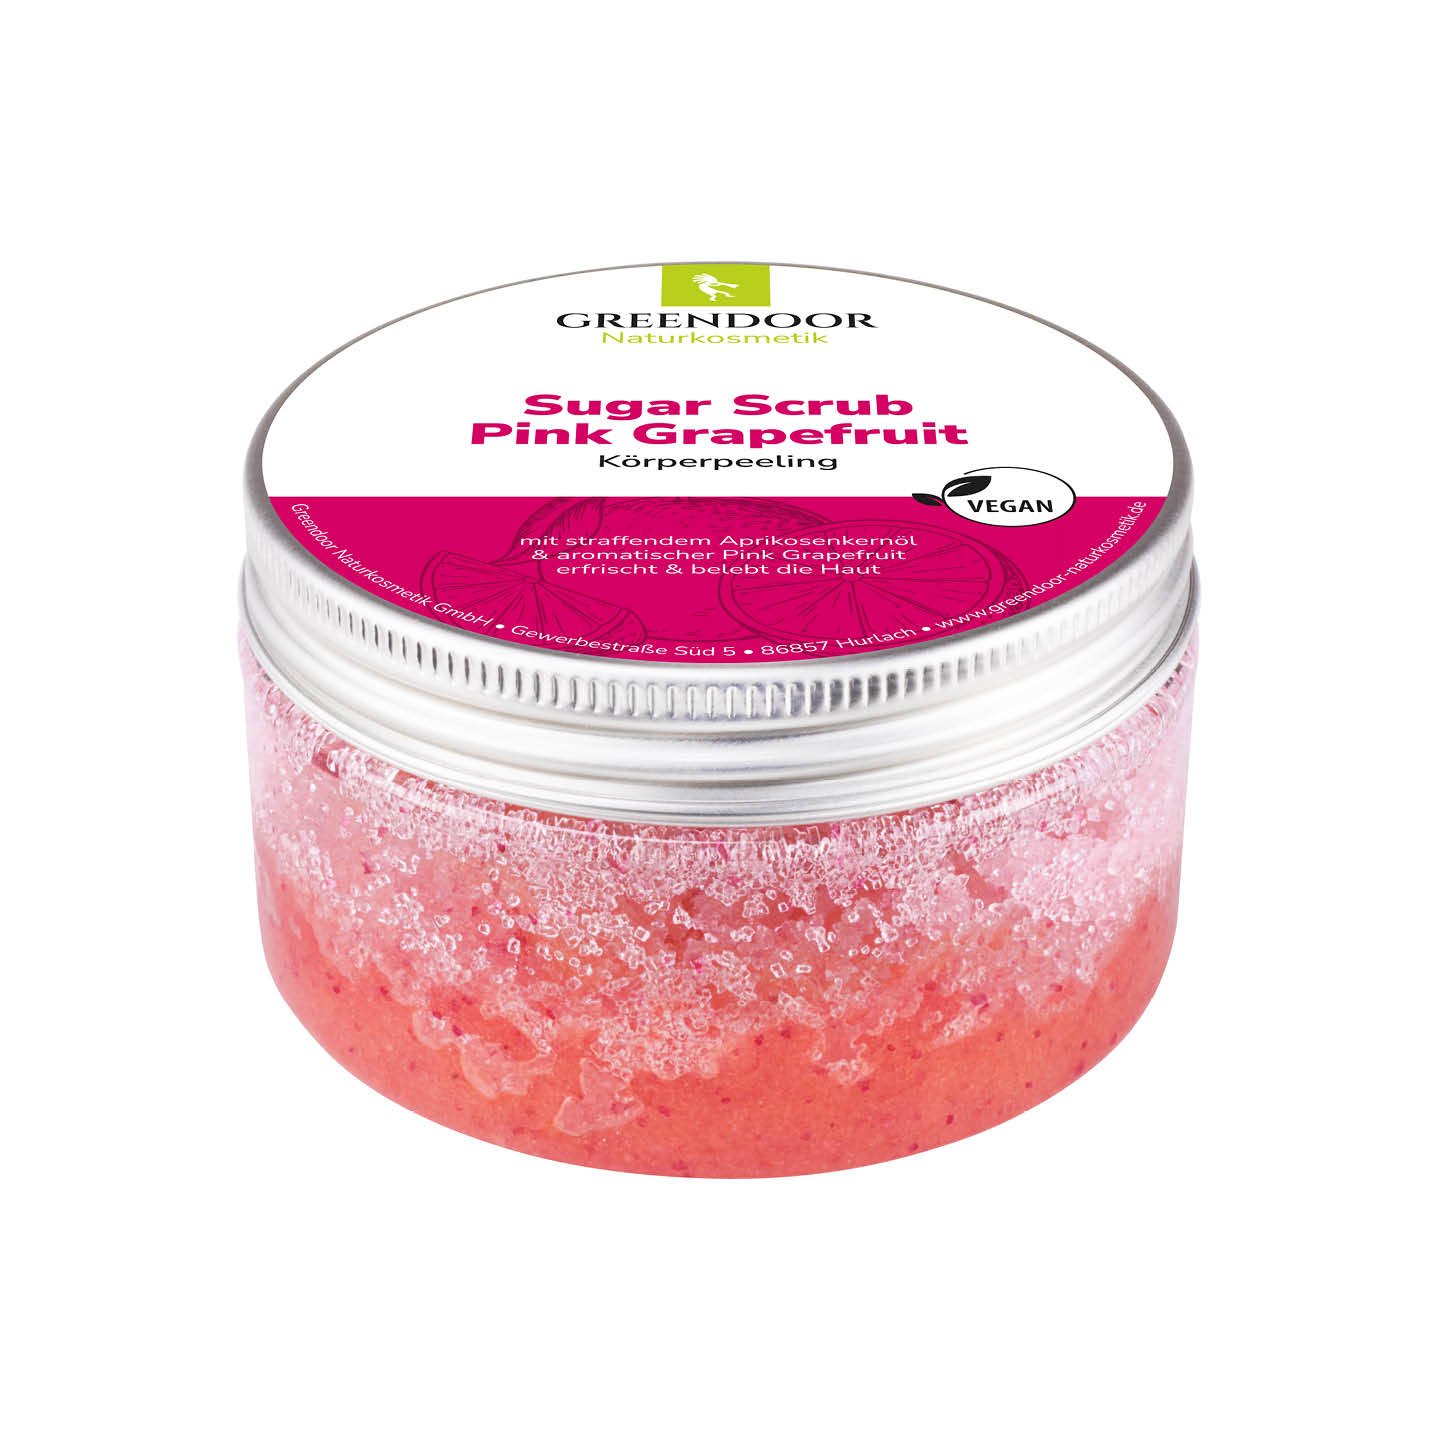 Sugar Scrub Pink Grapefruit veganes Körperpeeling ohne Mikroplastik, 230g